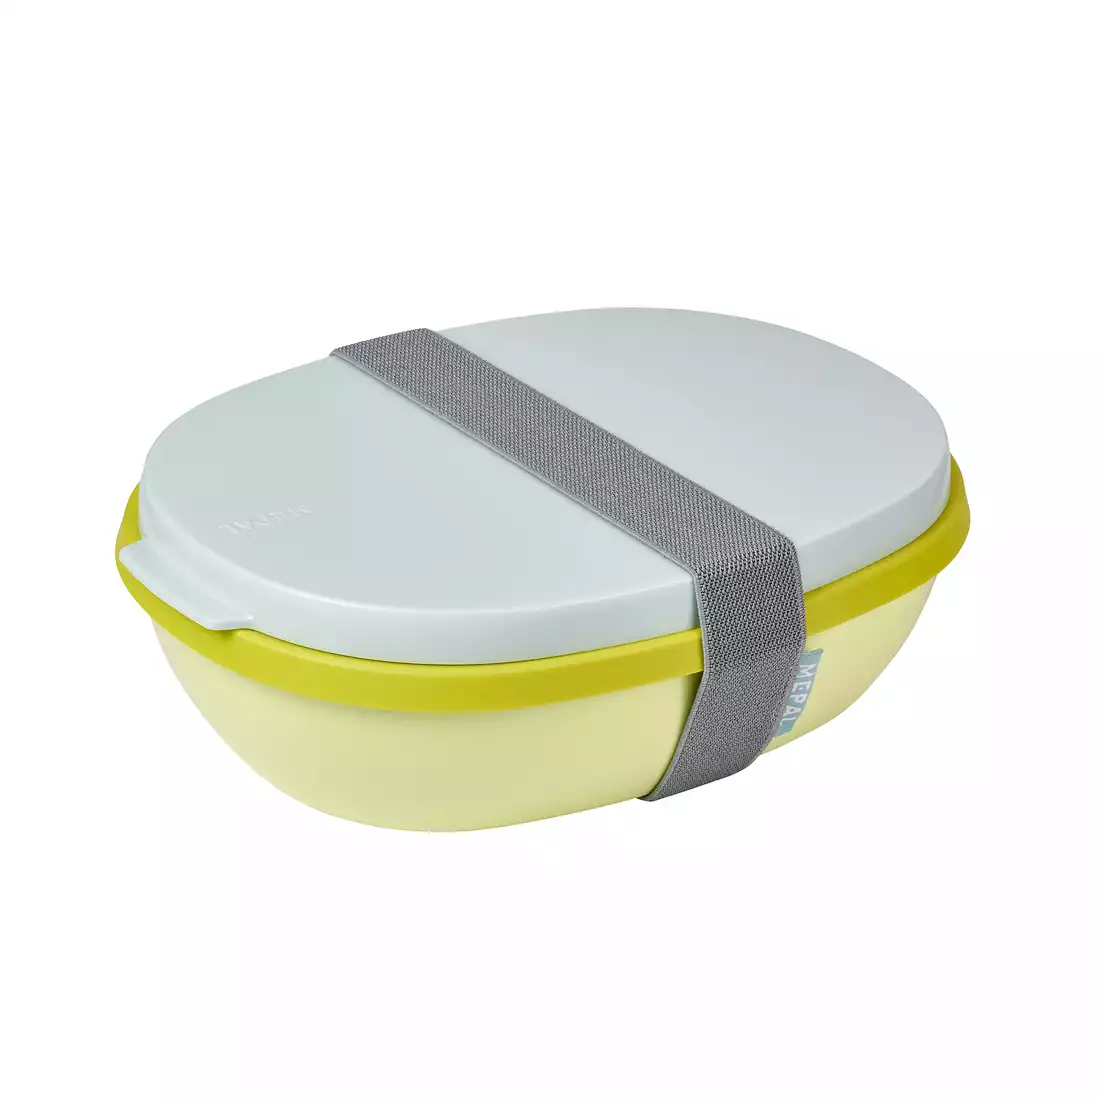 Mepal Ellipse Duo Lemon Vibe lunchbox, žluto-mátový